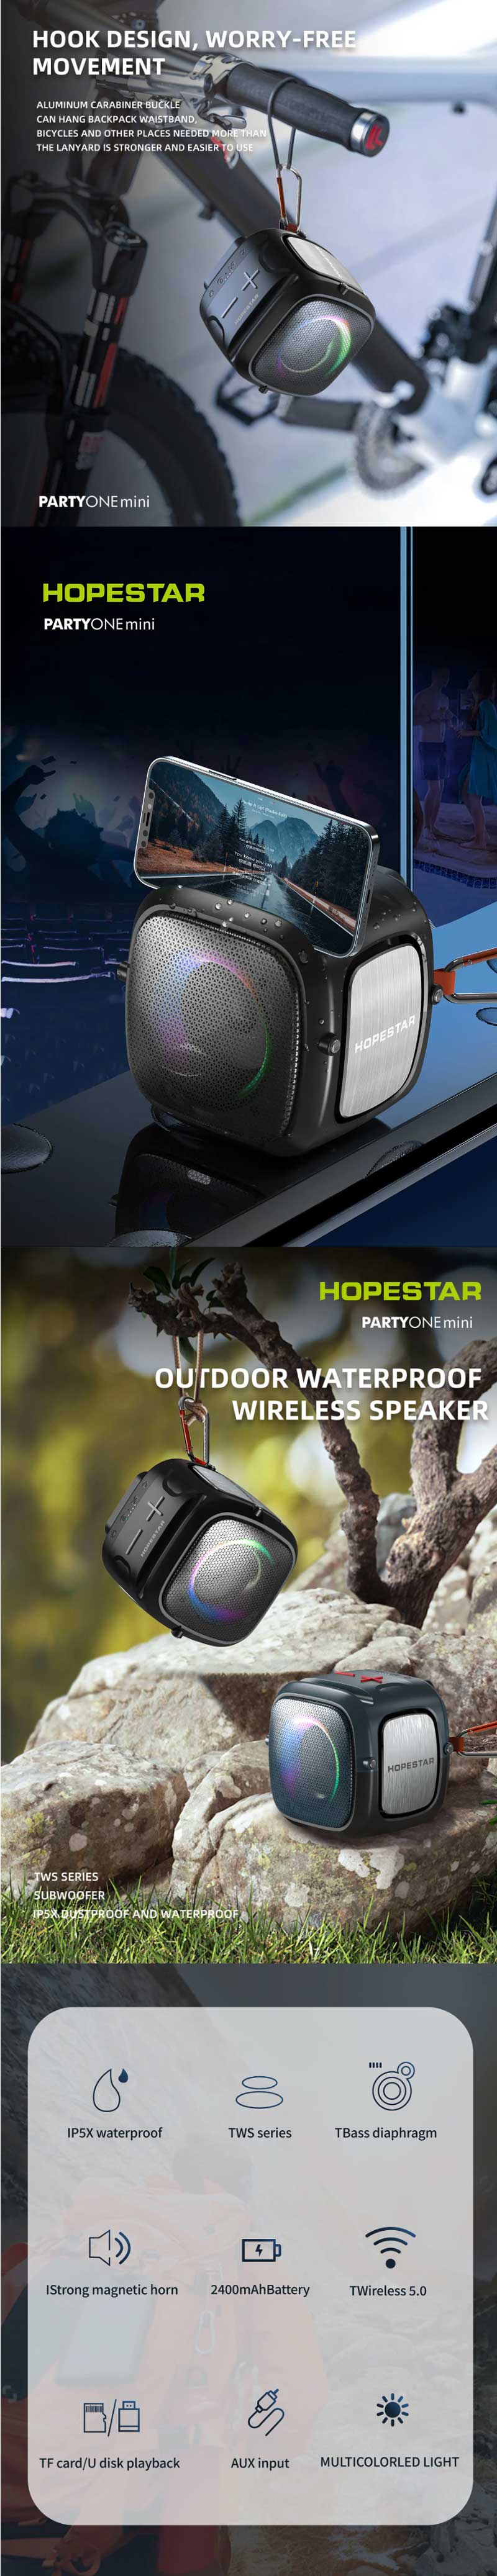 HOPESTAR Party One Mini Portable Bluetooth Speaker